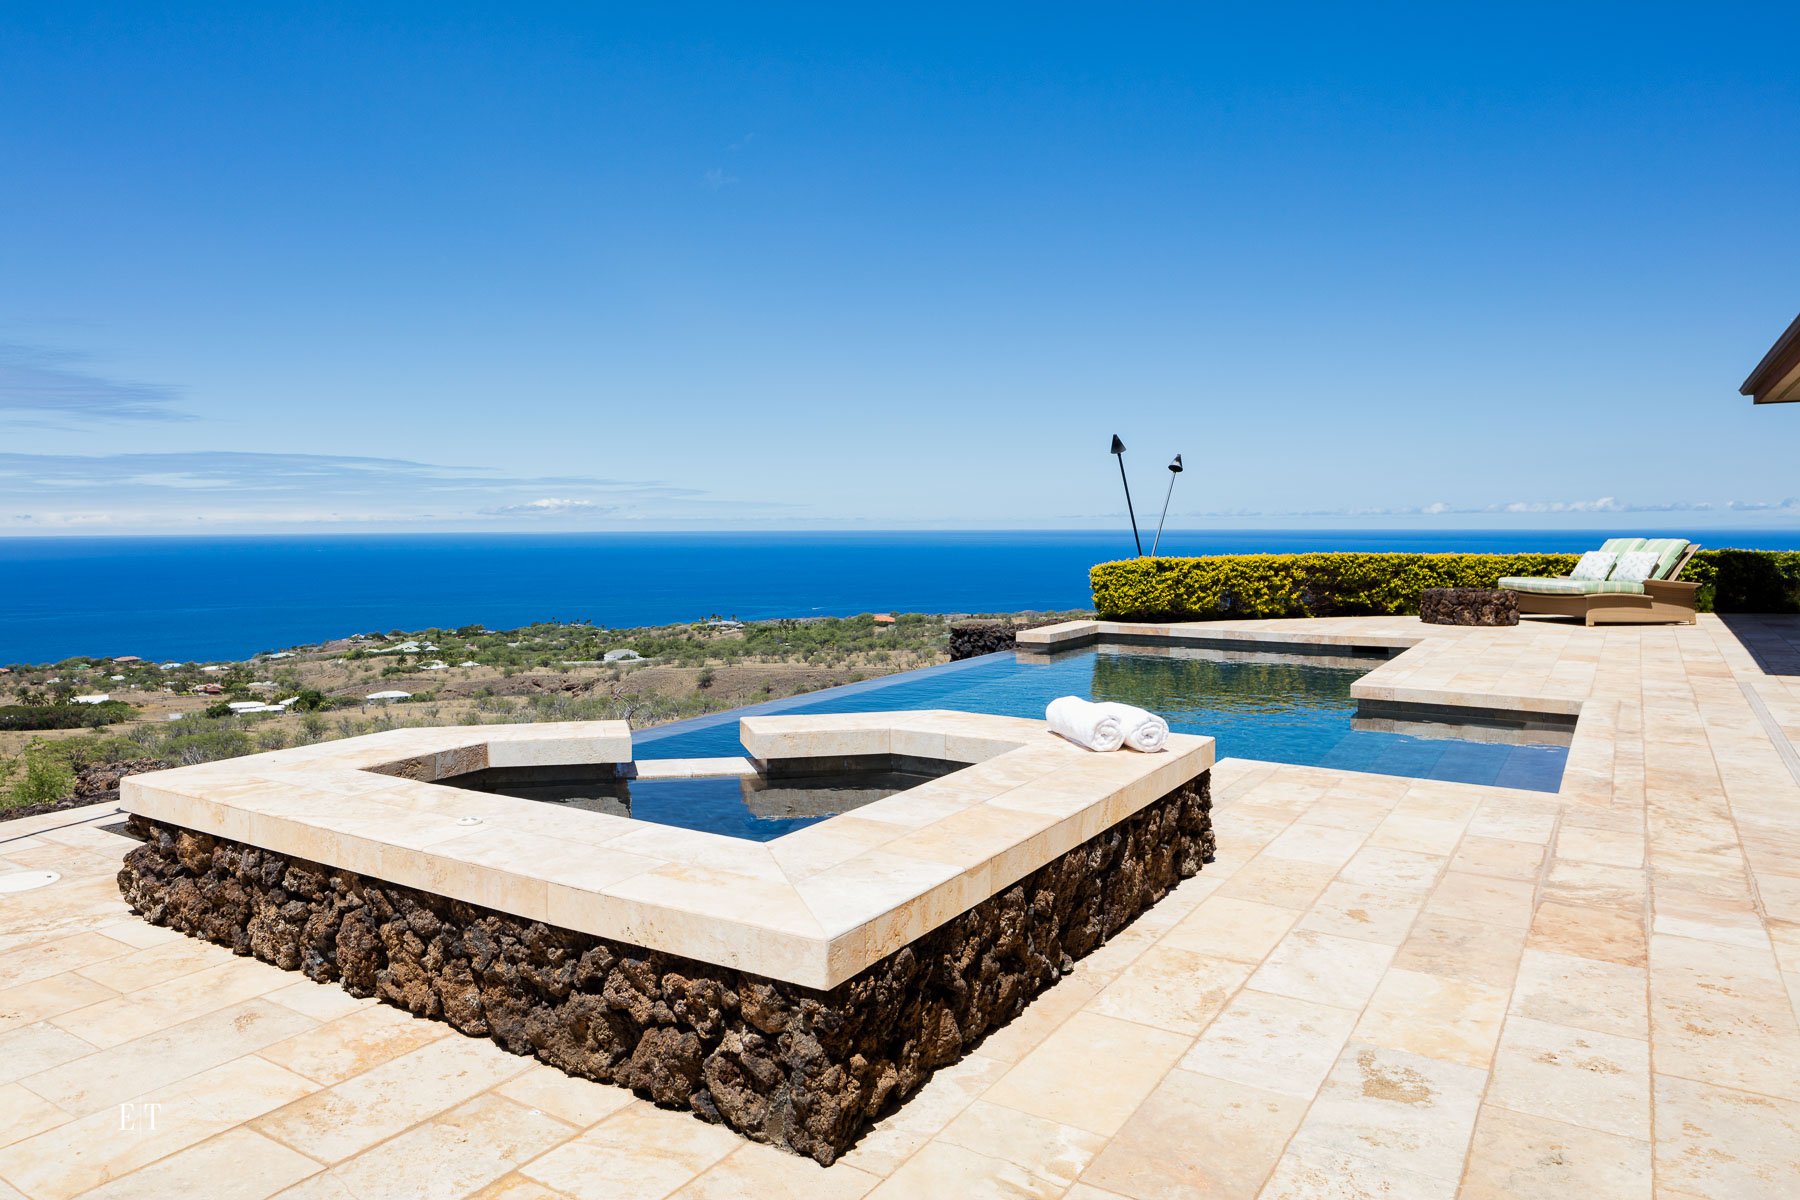  Infinity Pool at Kohala Ranch | Big Island | Luxury Real Estate Photography 